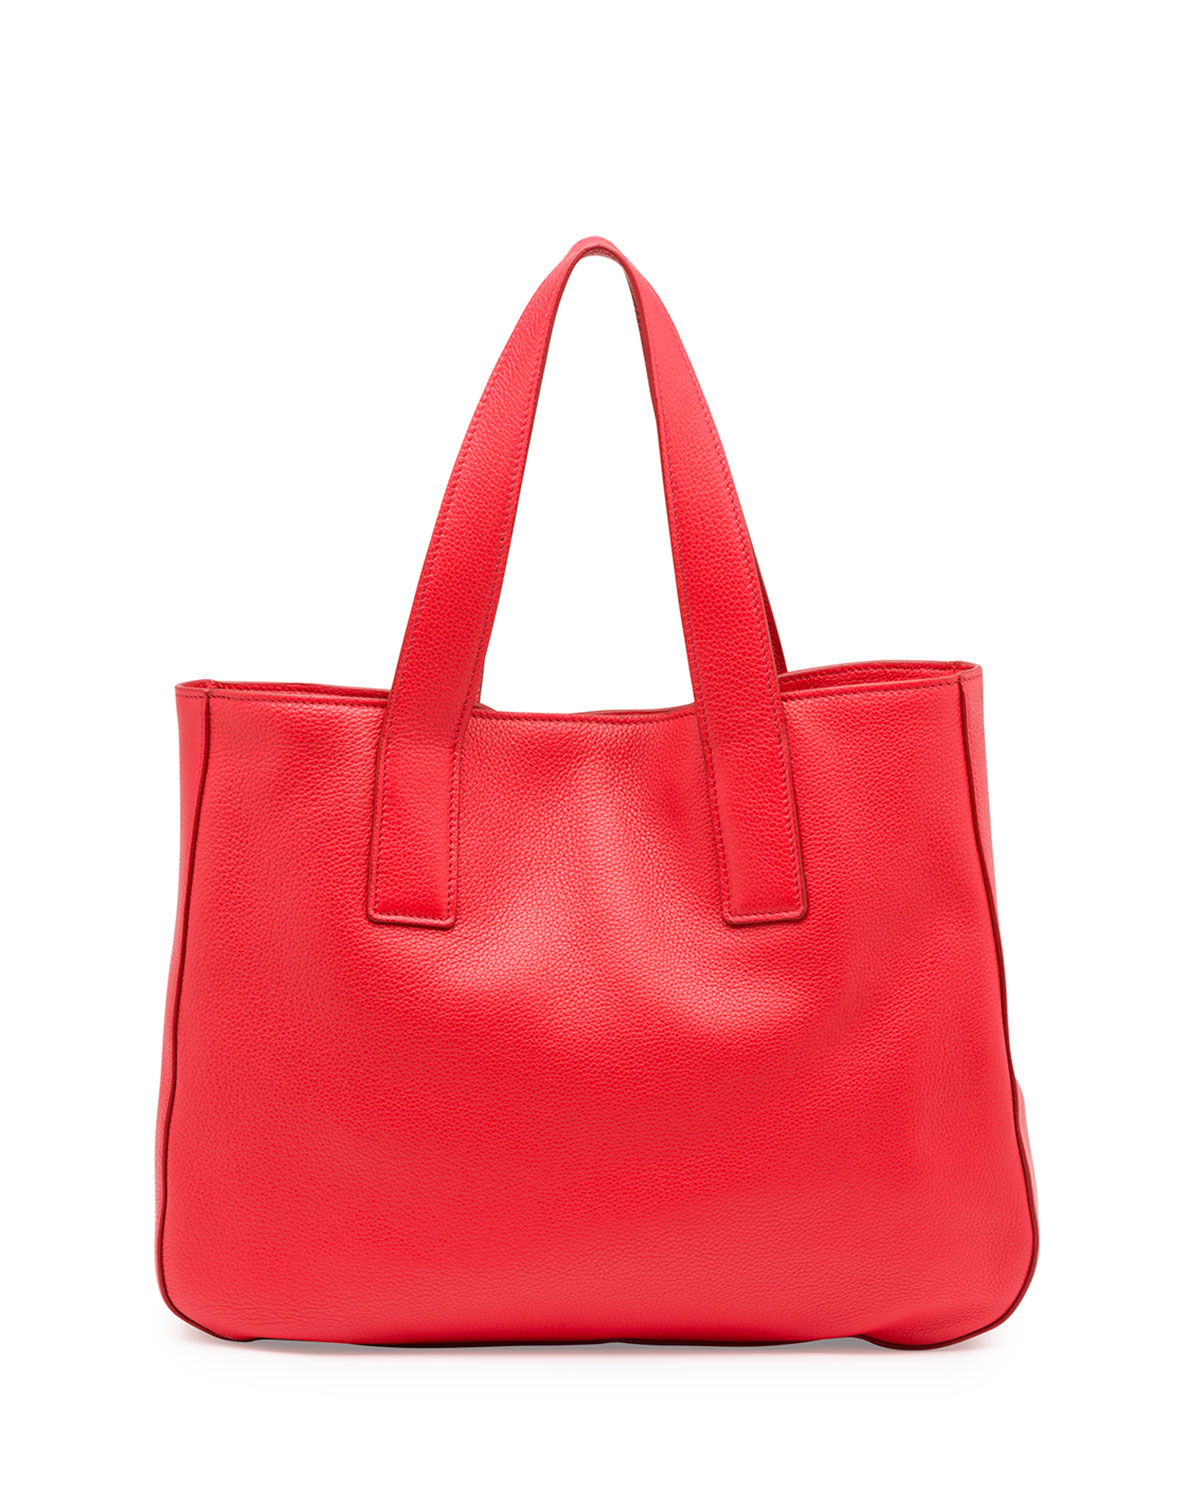 prada baby bag sale - Prada Vitello Daino Leather Tote Bag in Red (LACCA) | Lyst